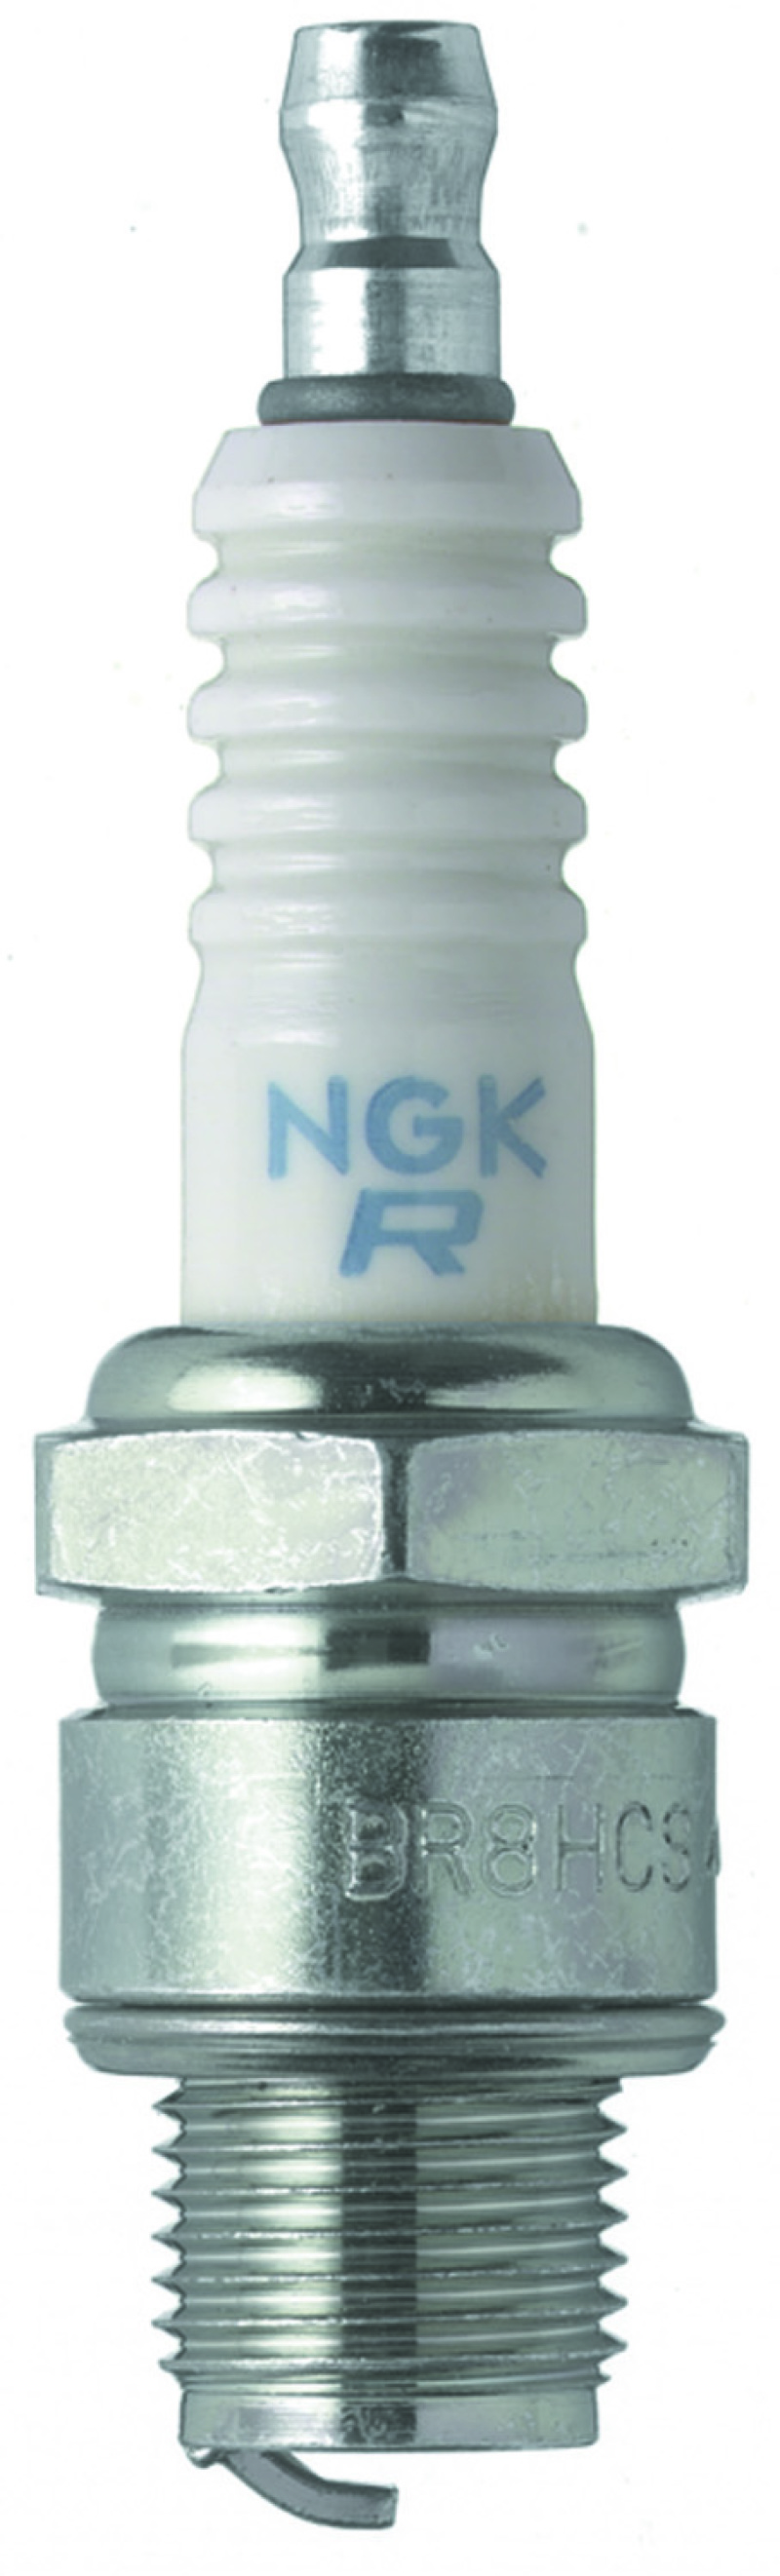 NGK Standard Spark Plug Box of 10 (BR8HCS-10) - 1157